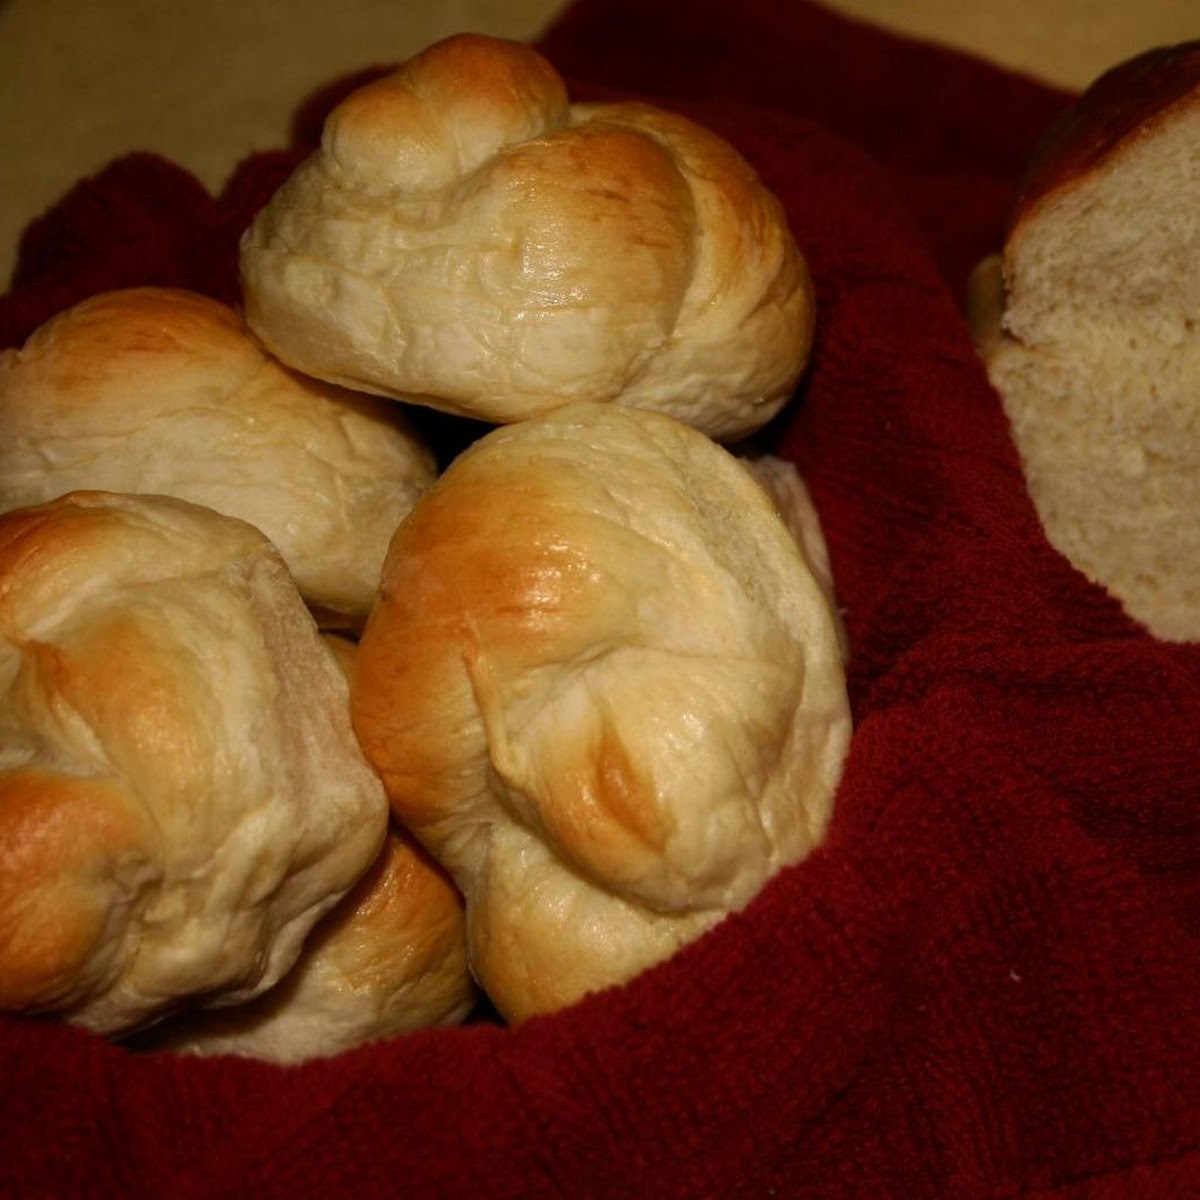 Potato Buttermilk Bread - Don't Waste the Crumbs